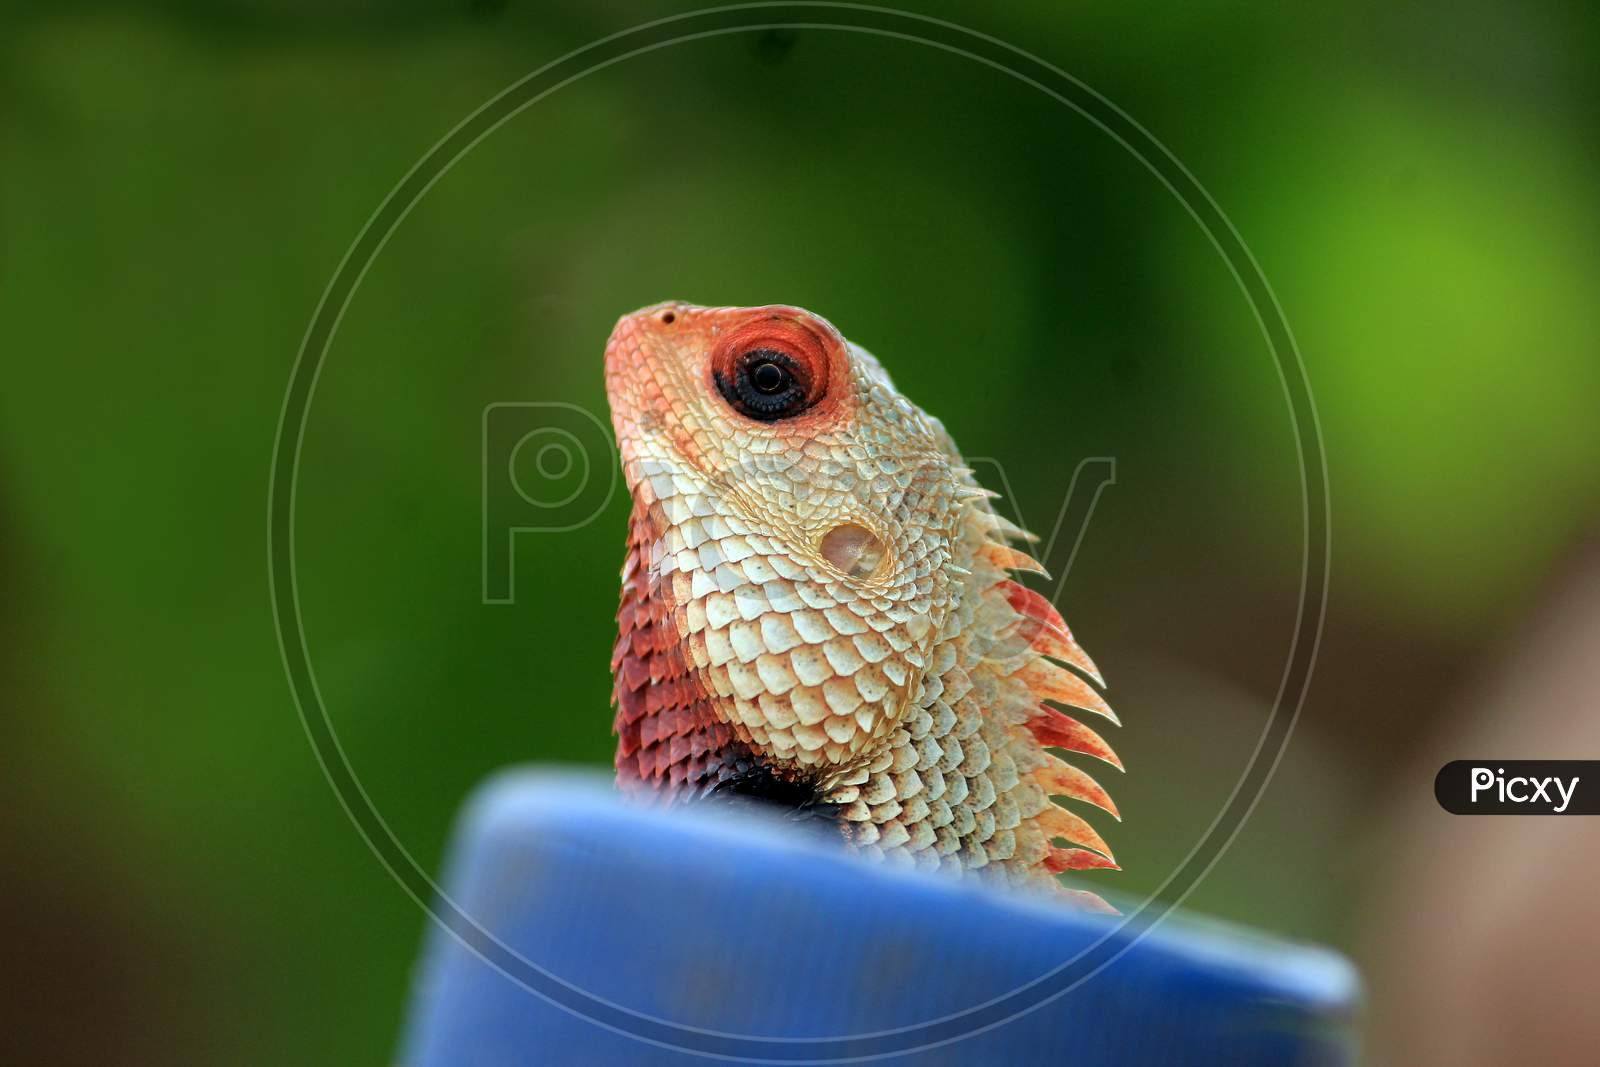 Lizard head closeup image.